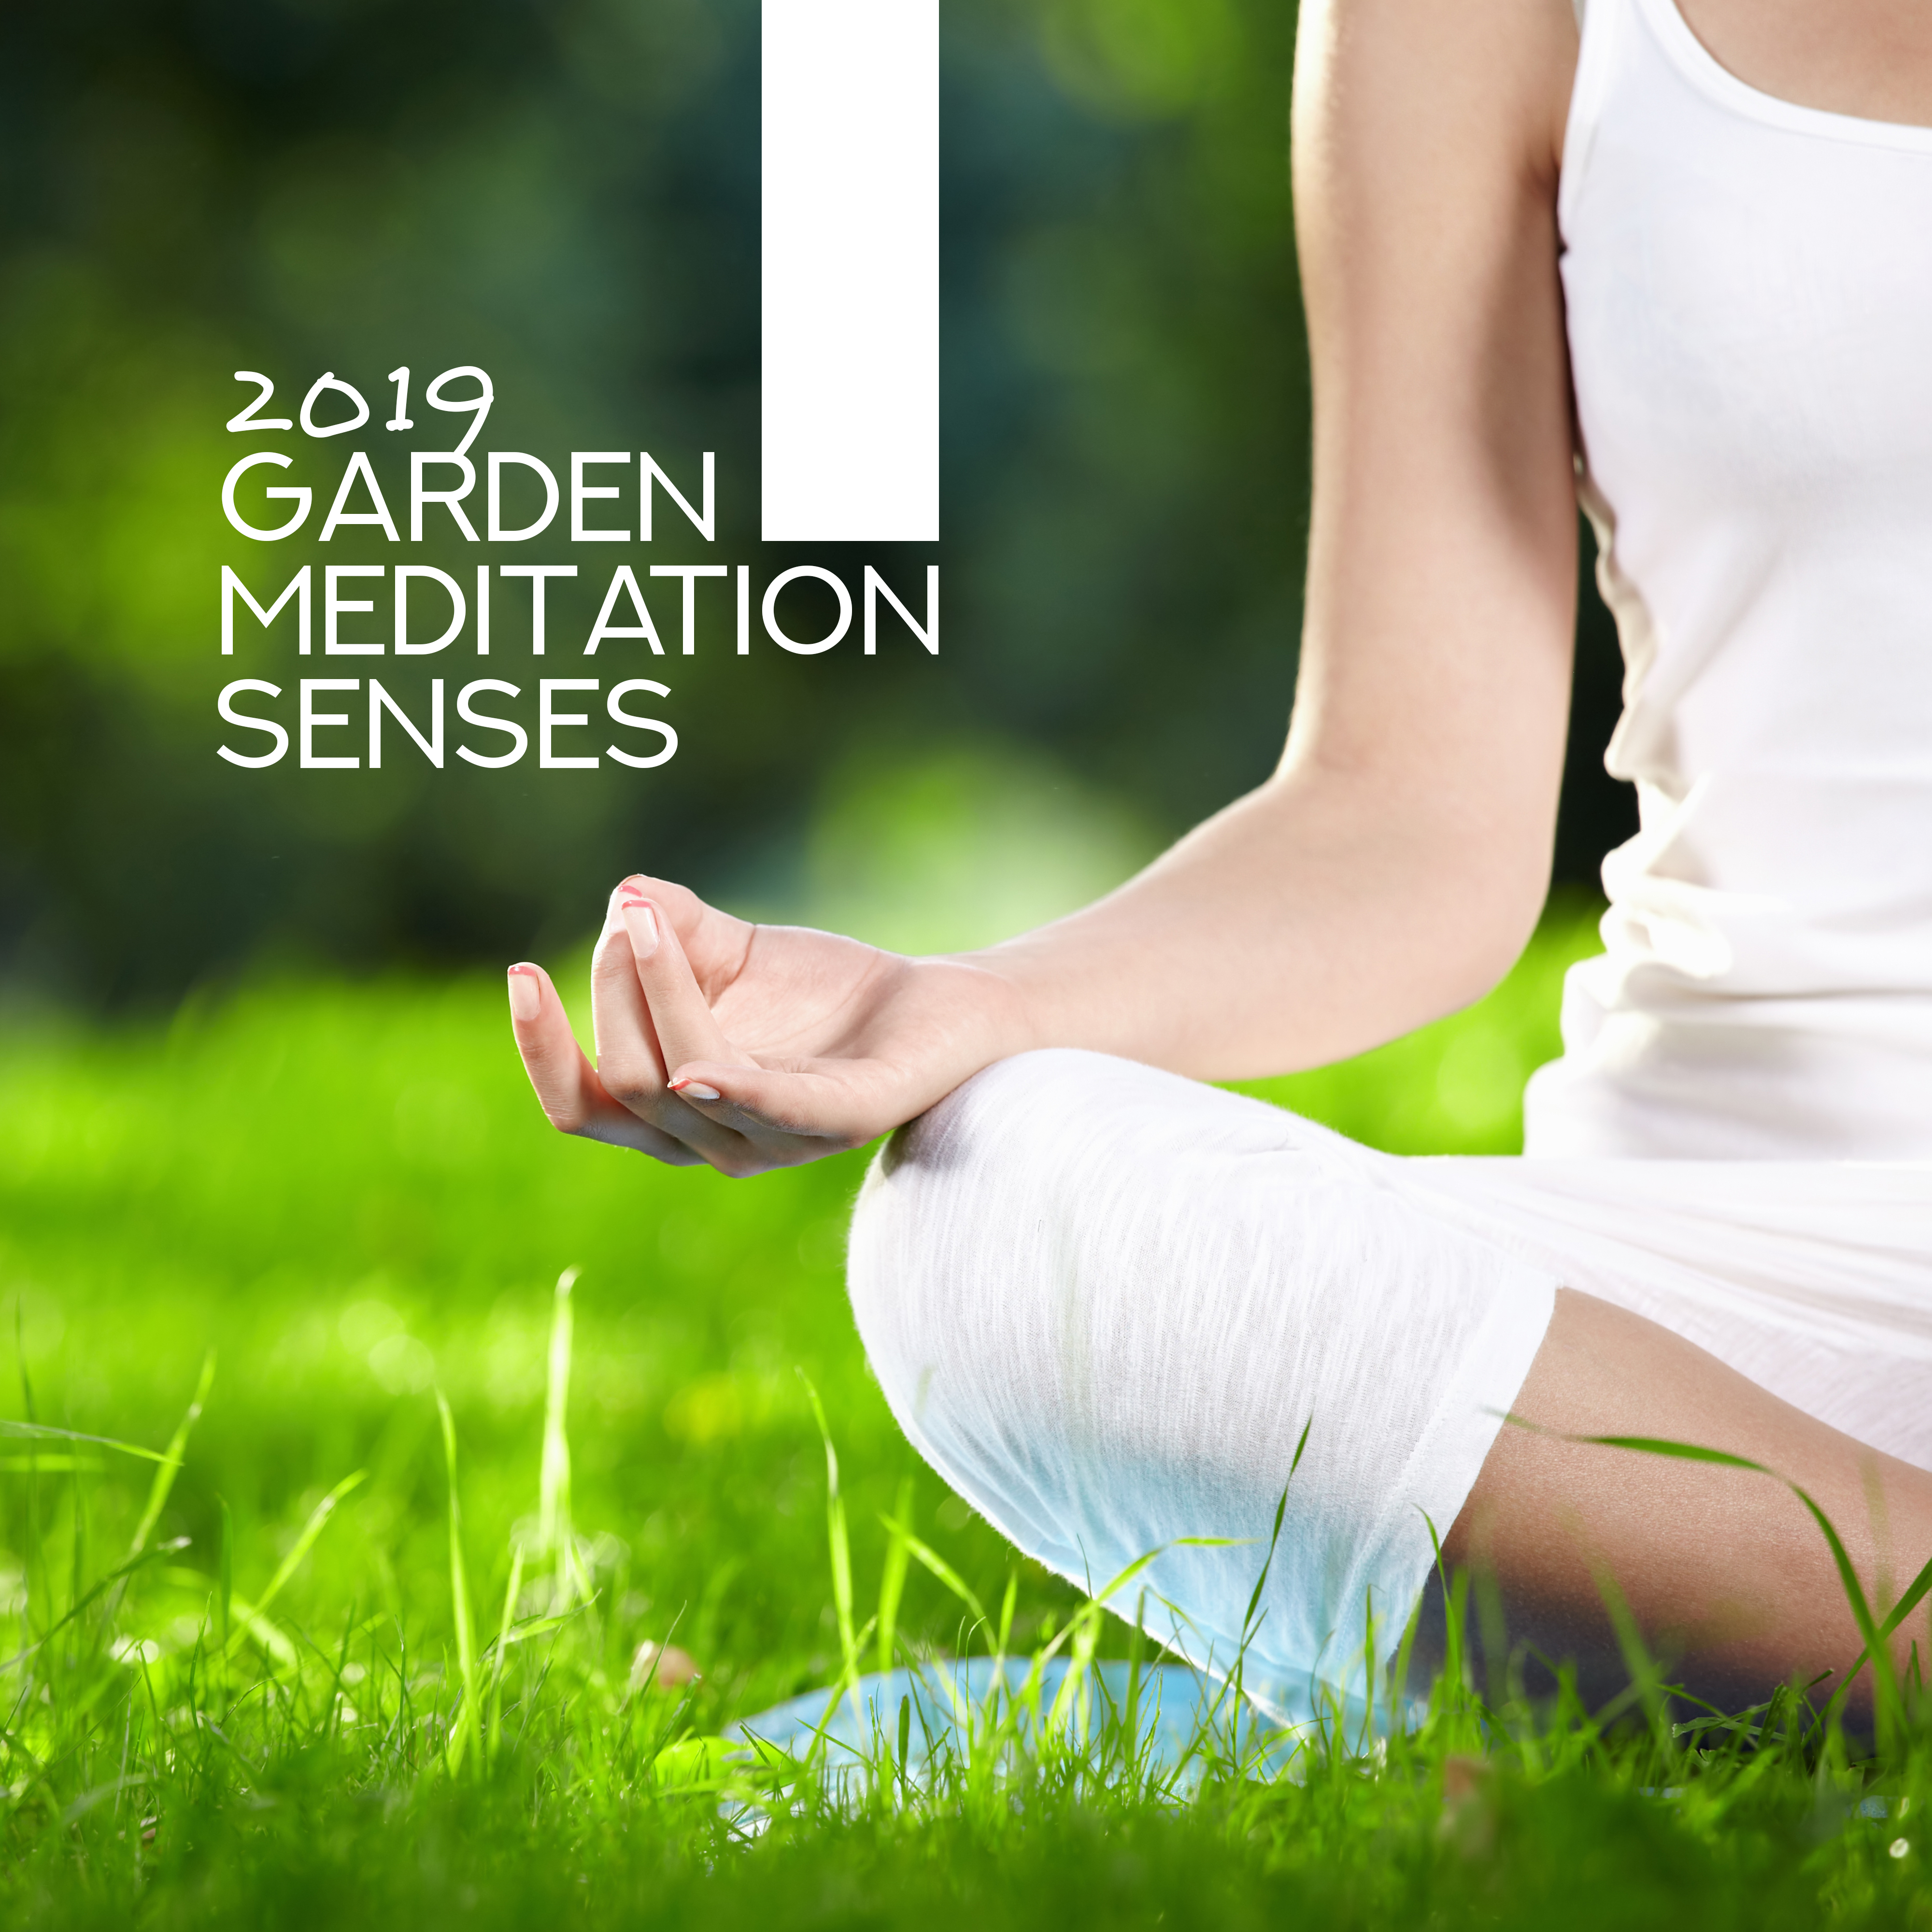 2019 Garden Meditation Senses - Spiritual Tracks for Meditation, Relaxing Music for Yoga, Calm, Meditation Music Zone, Harmony Meditation Melodies